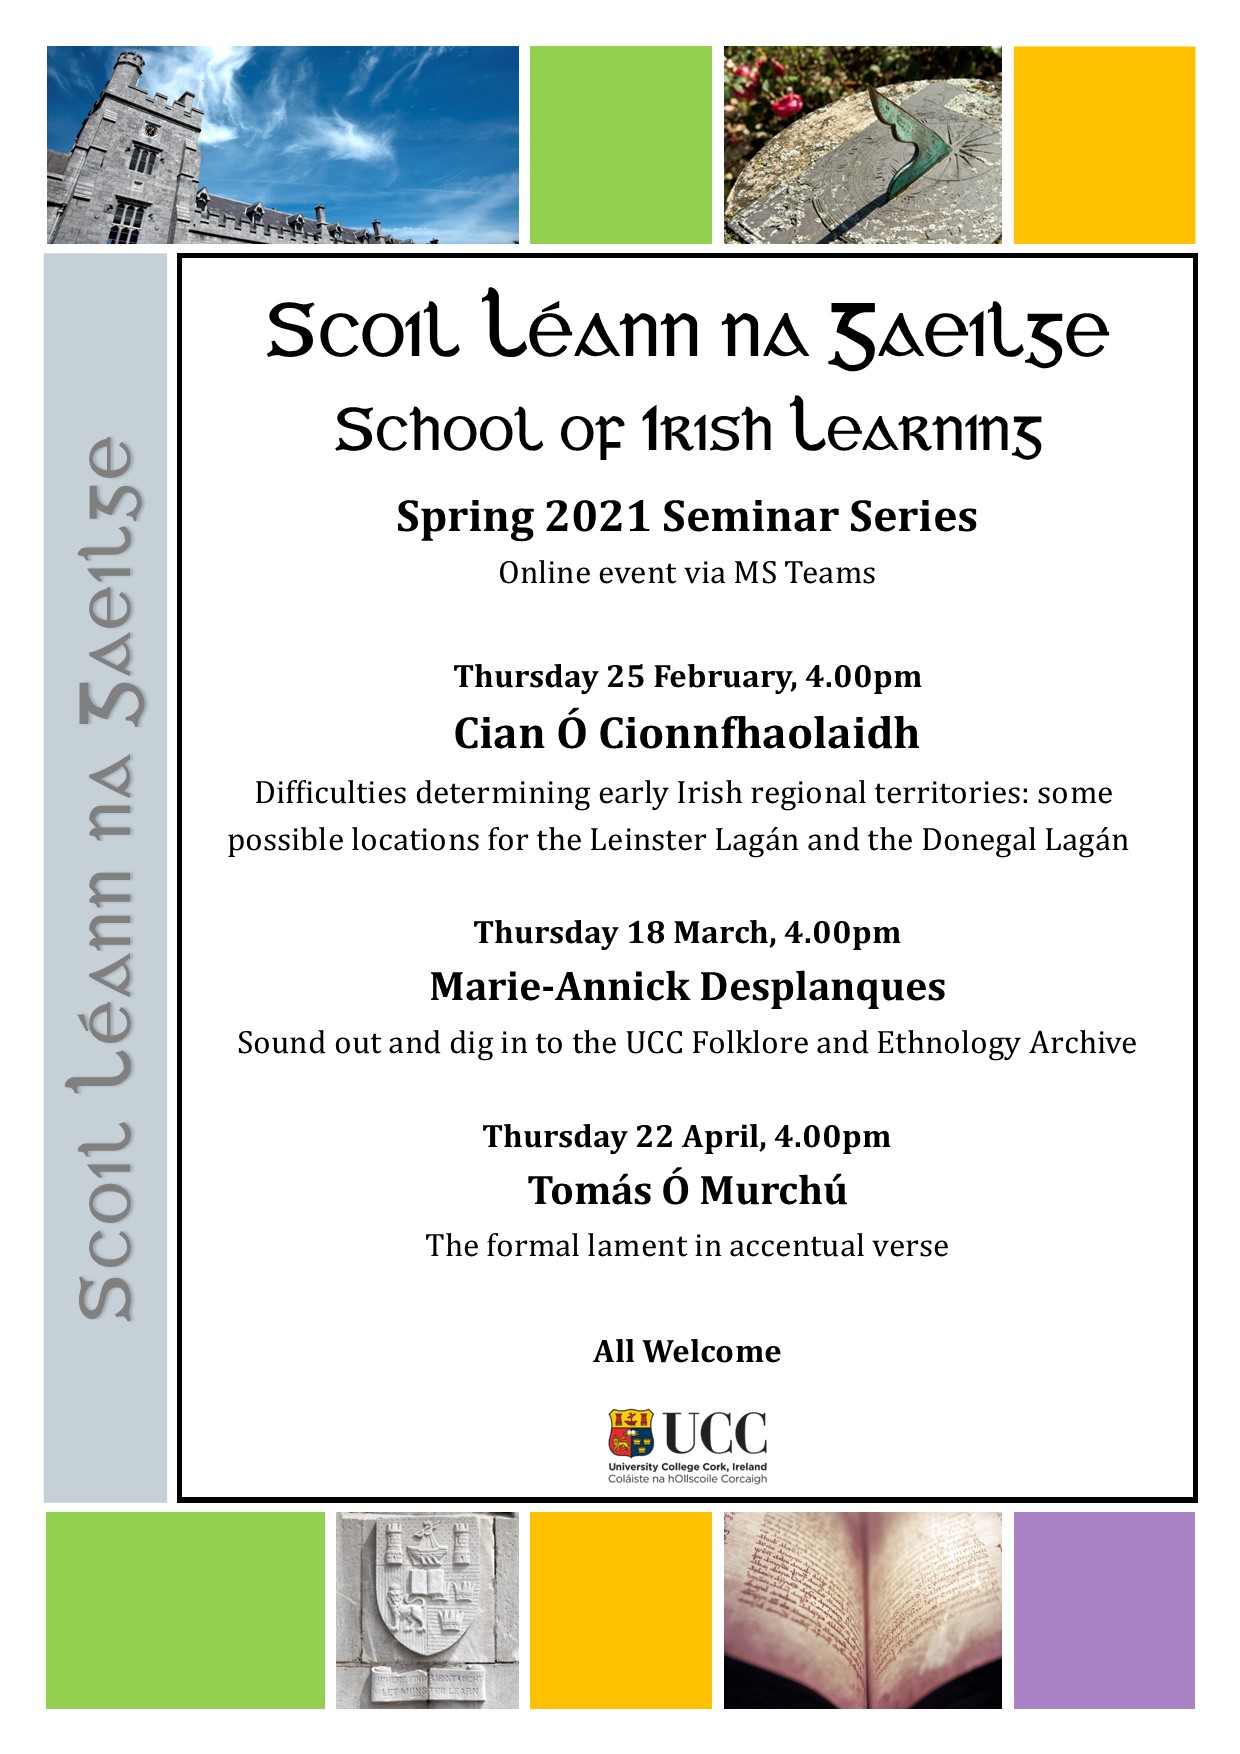 School of Irish Learning Spring Seminar Series